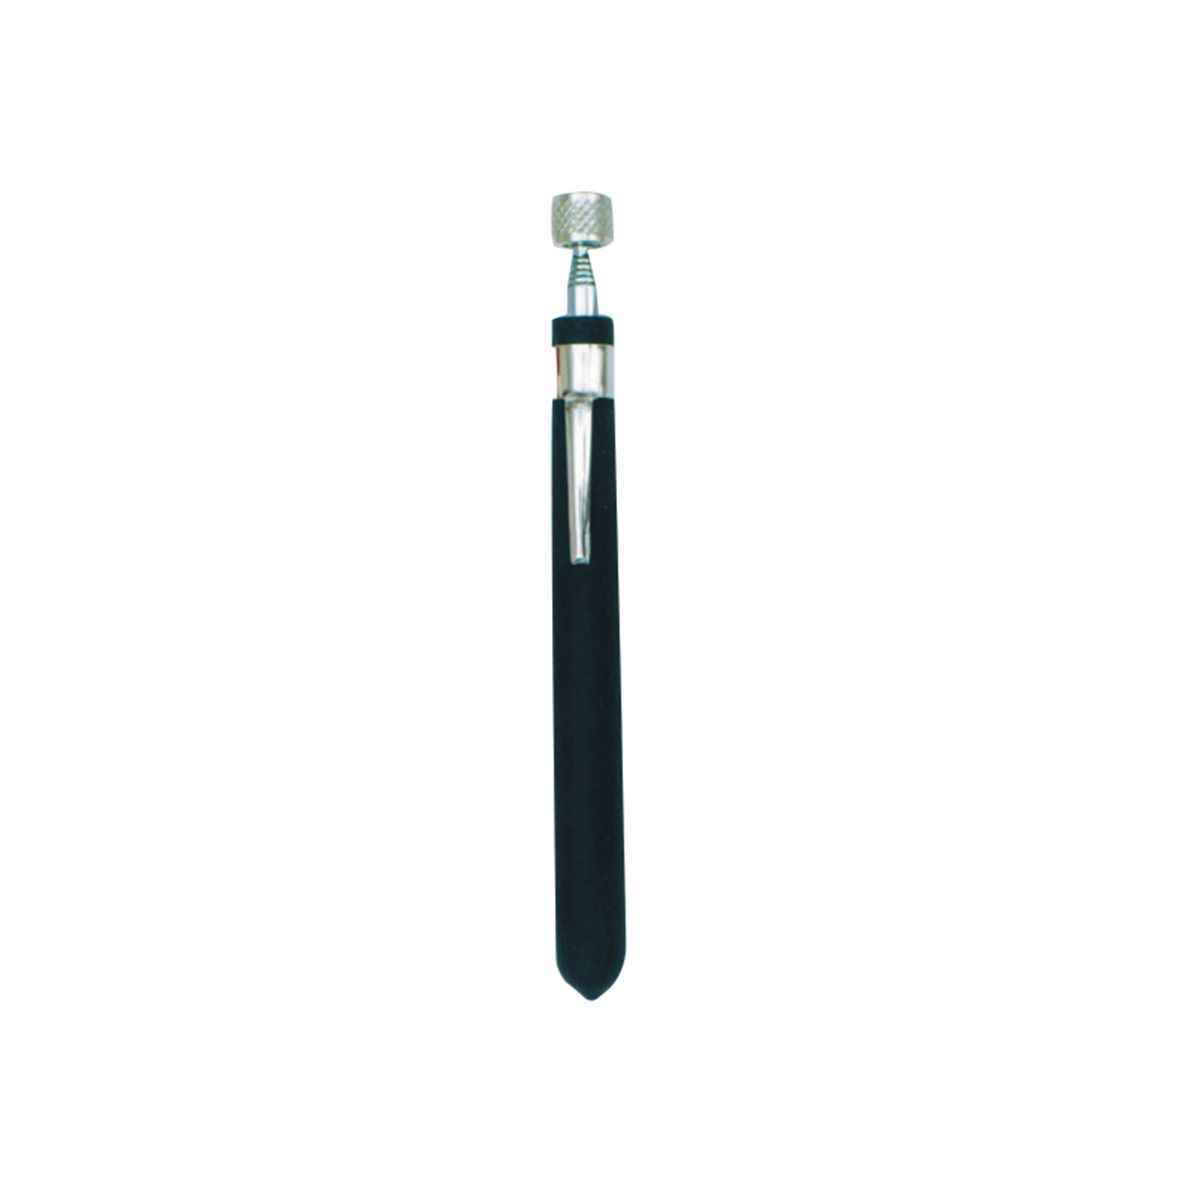 z-nla Magnetic Pick-Up Tool w/ 1.5 Lb Powercap